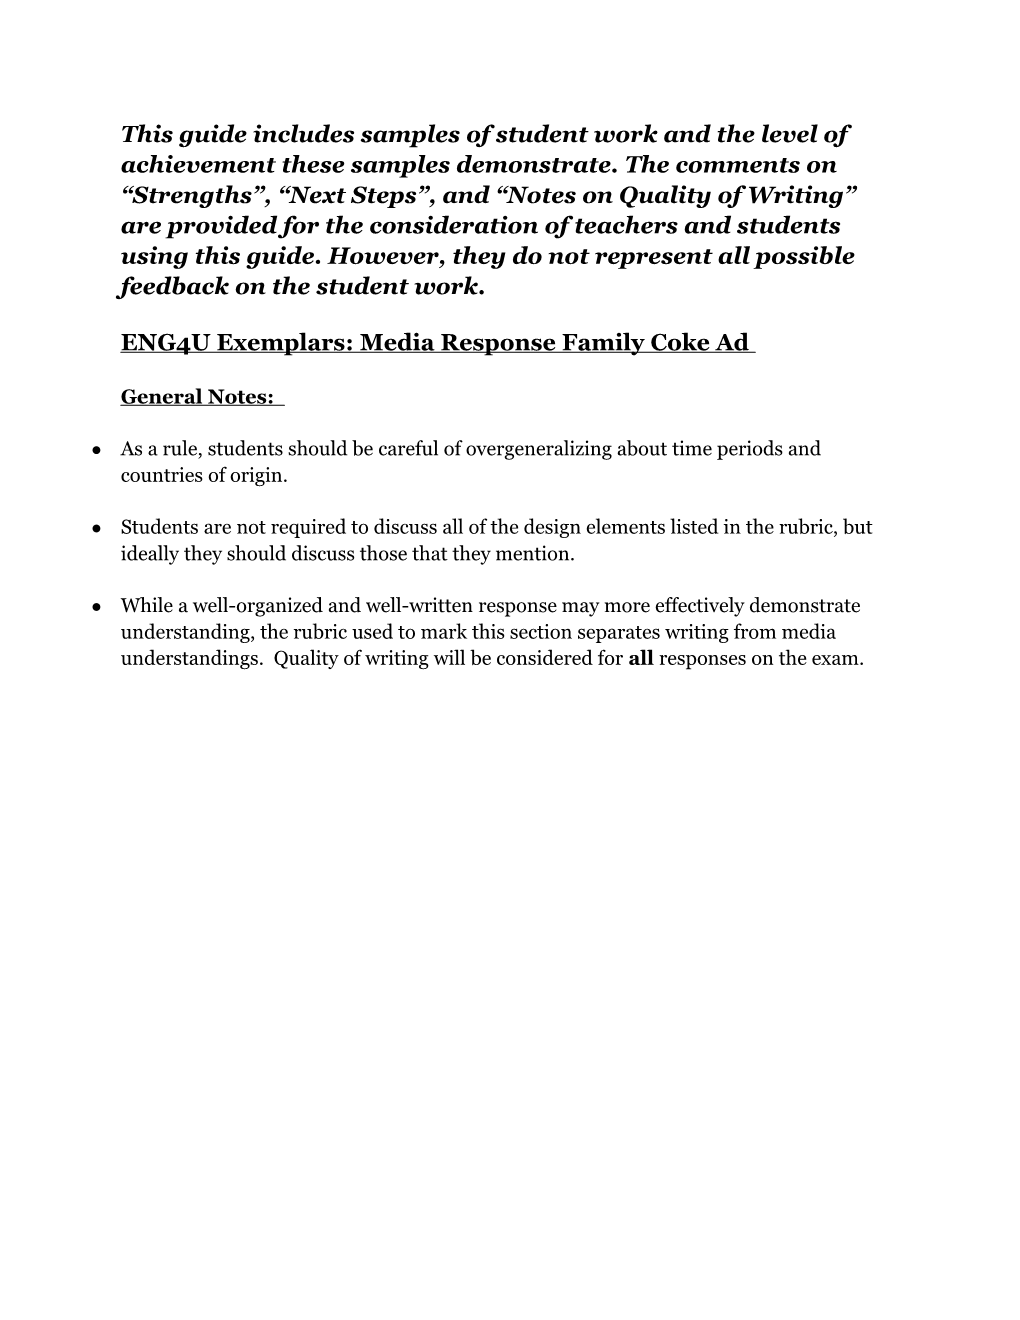 ENG4U Media Response Exemplars for Distribution